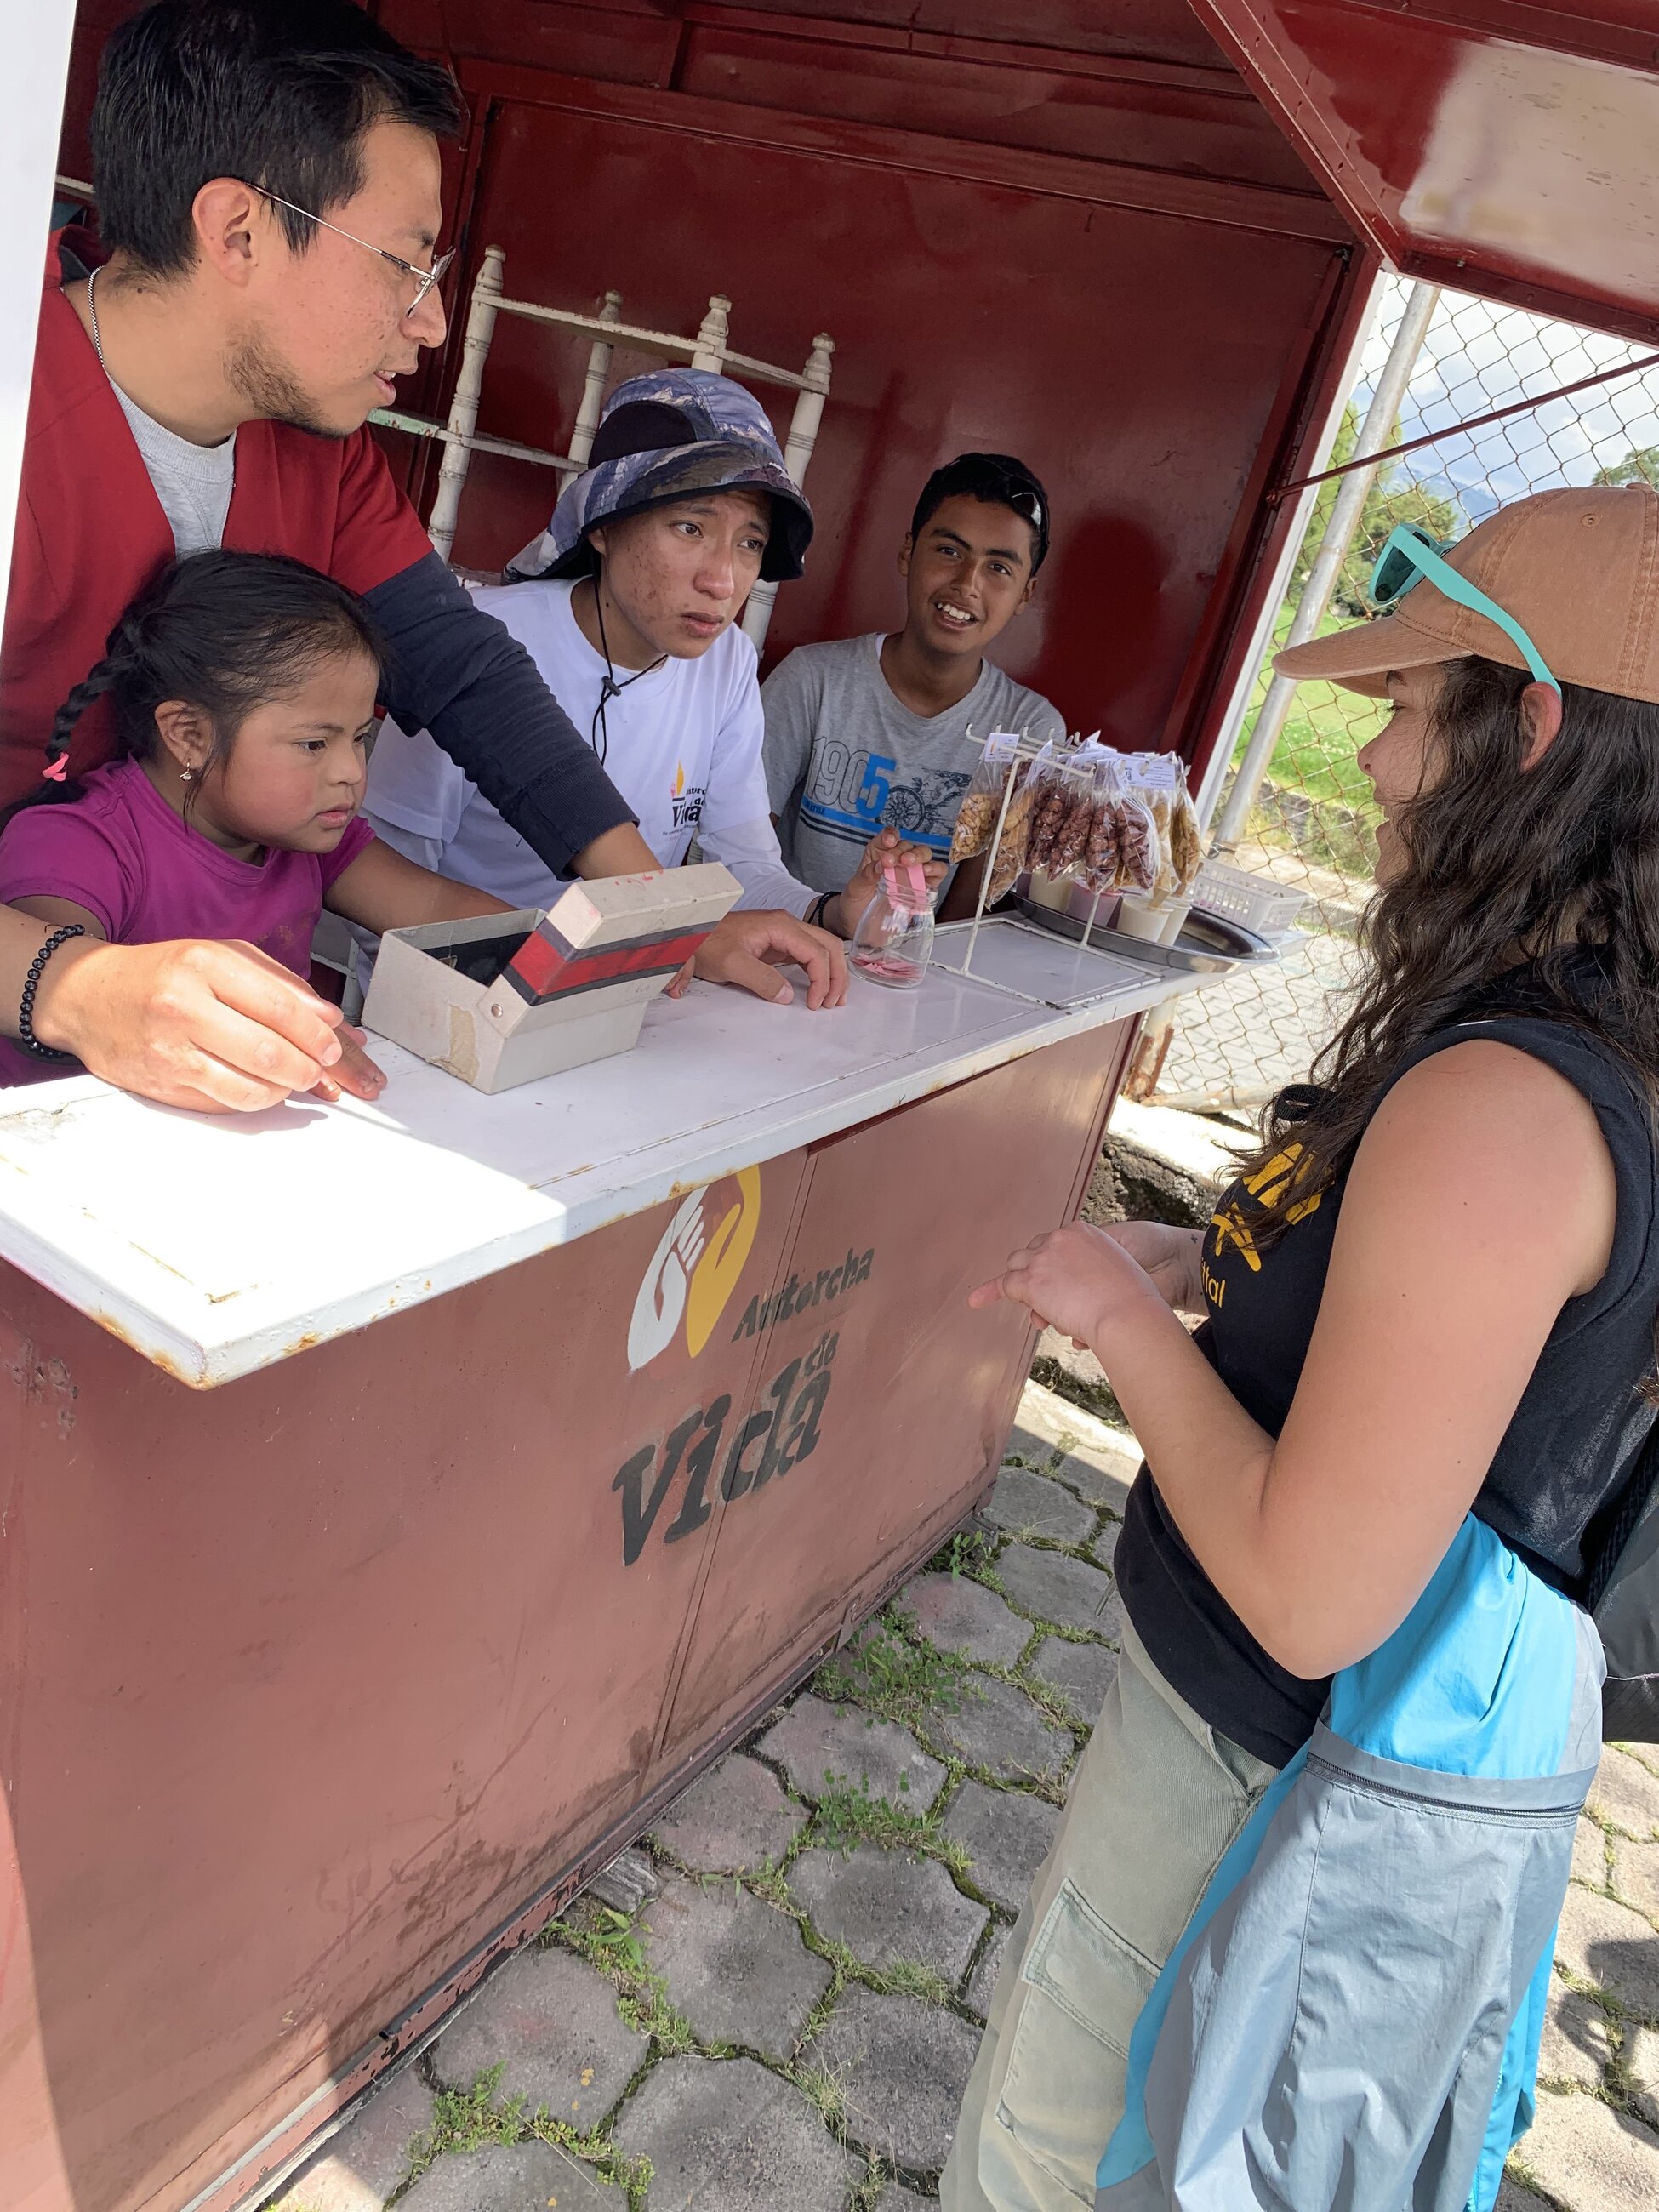 Buying Ice Cream at Antorcha De Vida